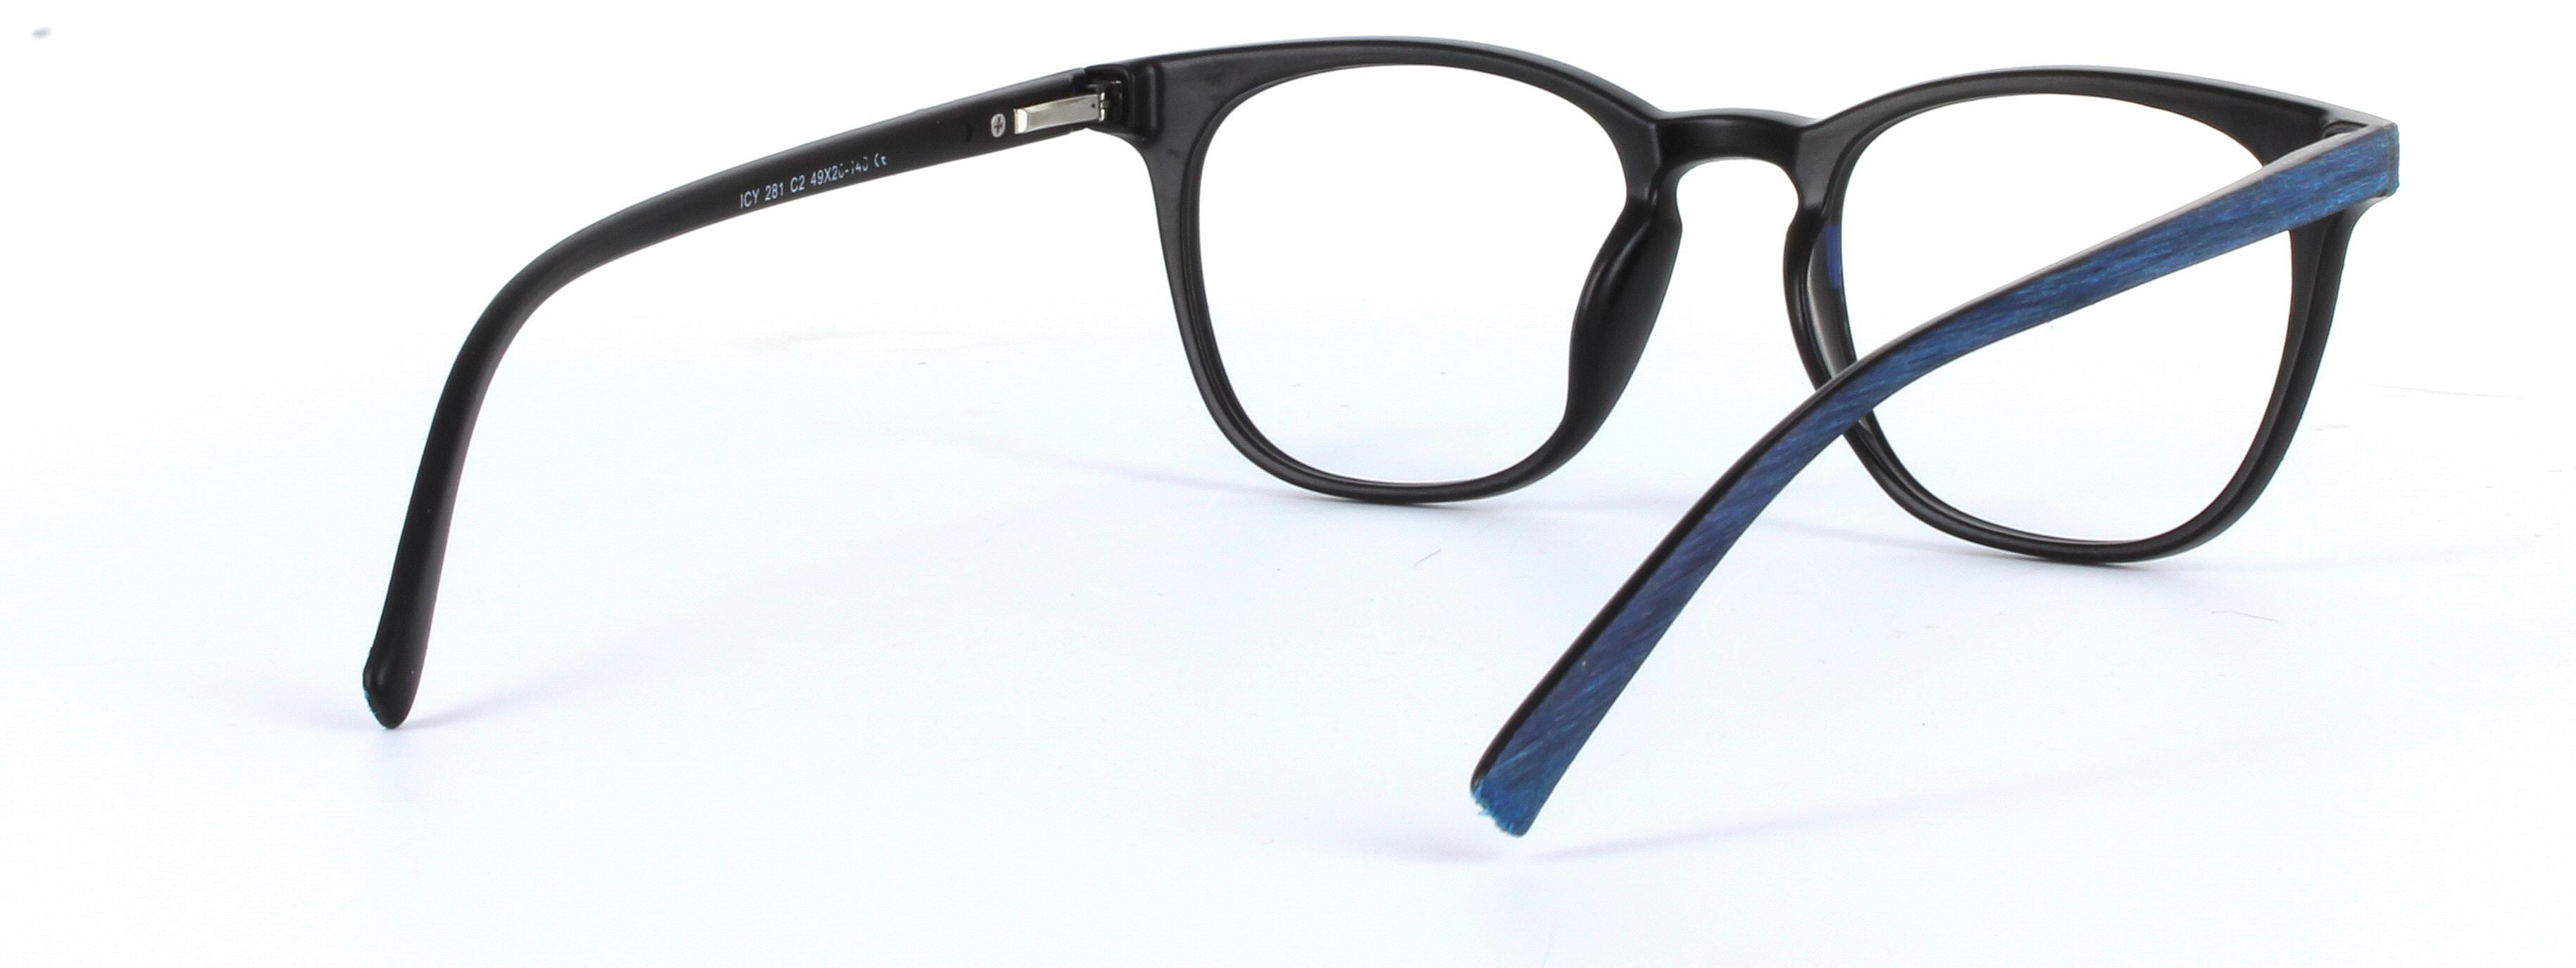 Aubrey Blue Full Rim Oval Round Plastic Glasses - Image View 4